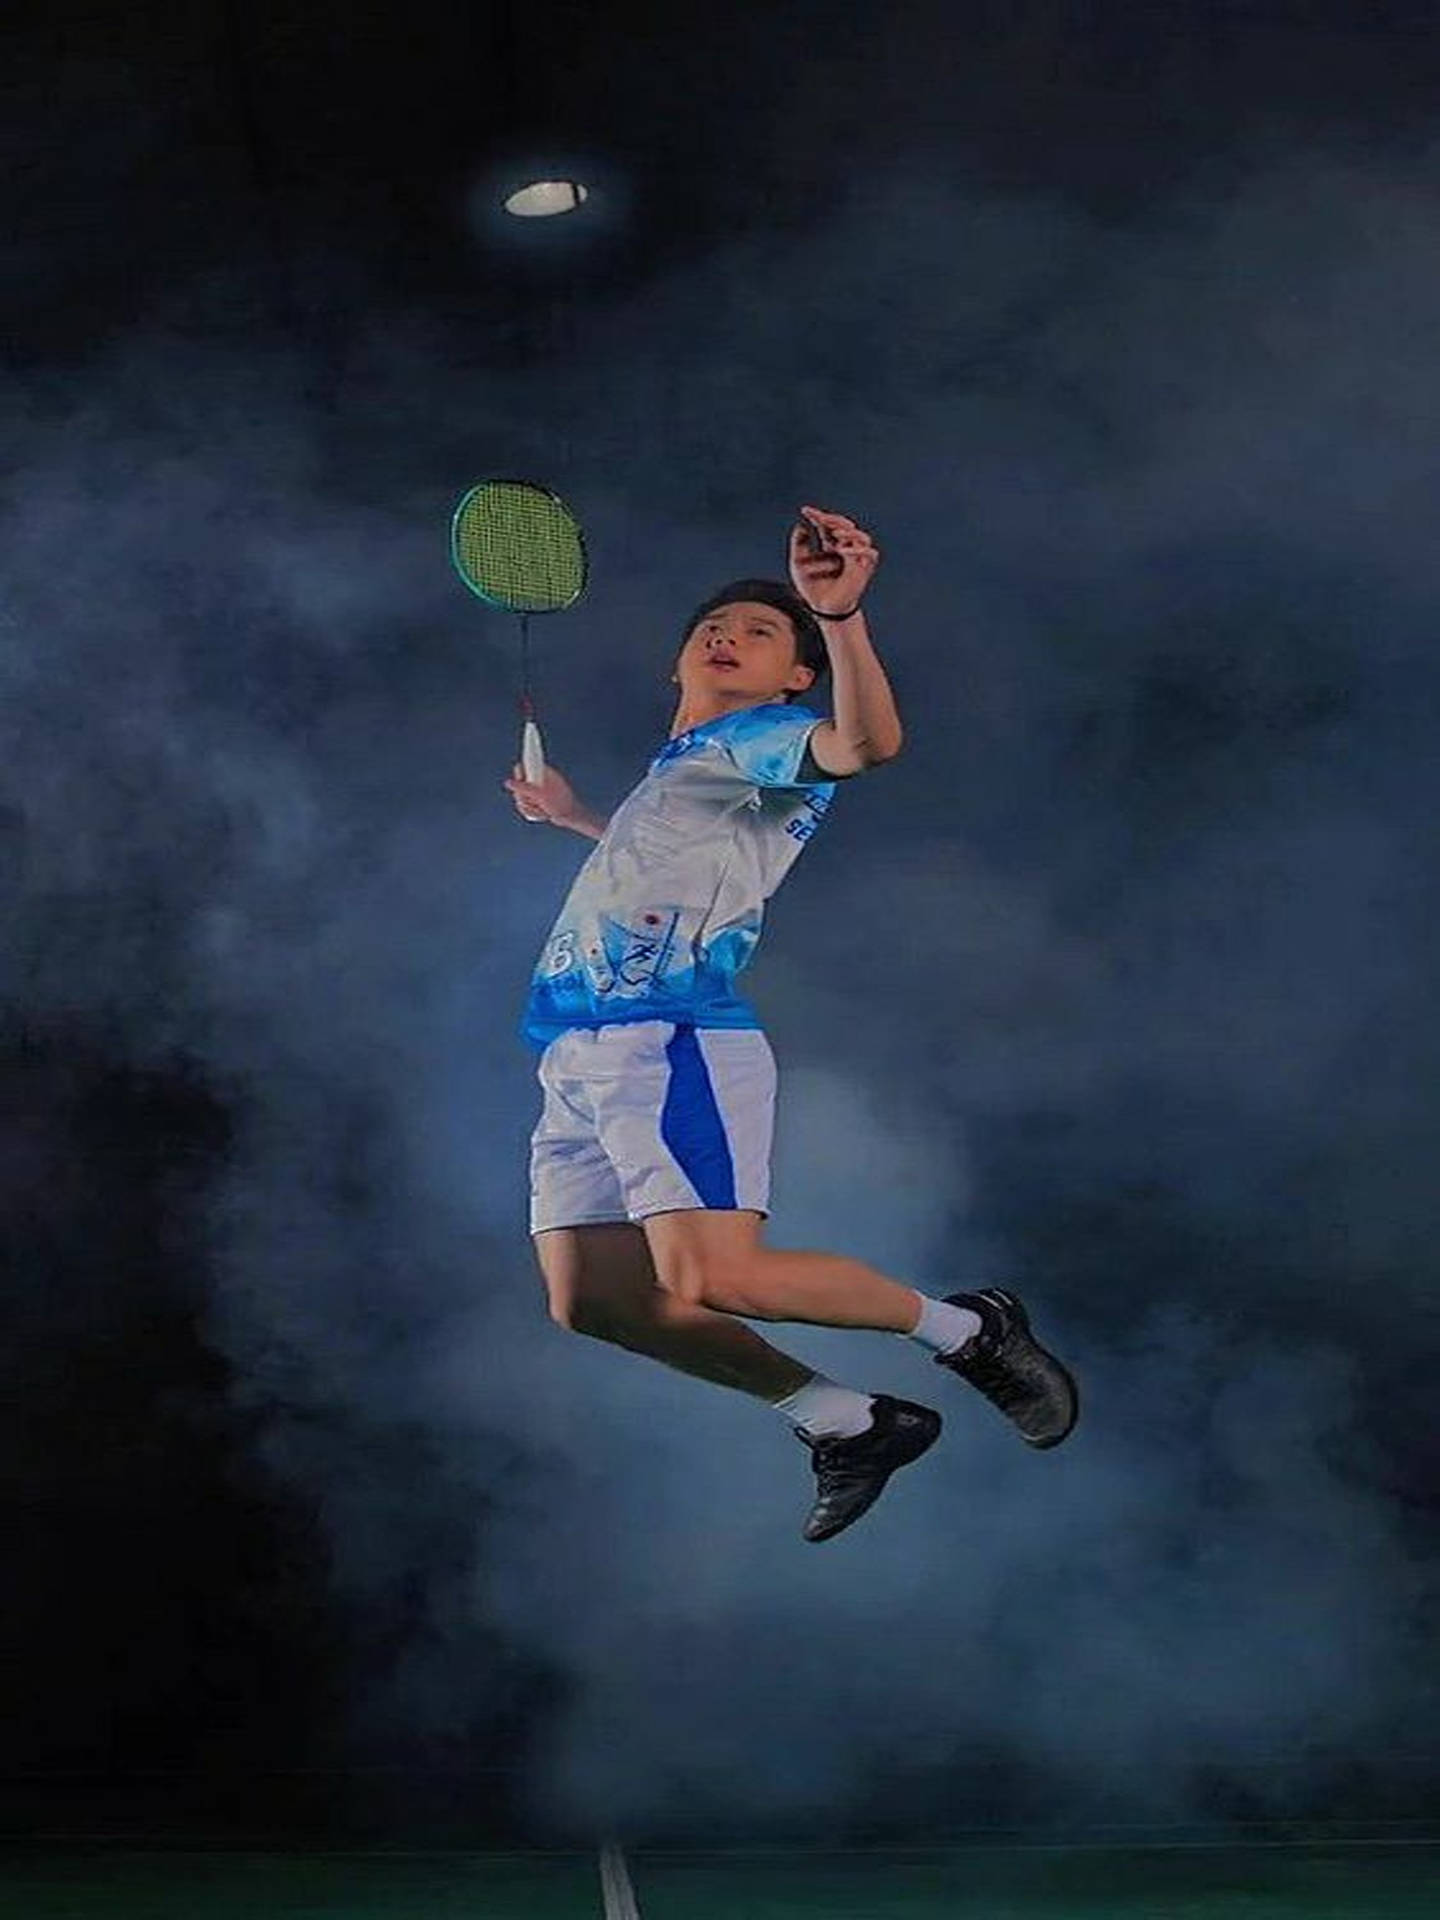 Kevin Sanjaya Showcasing His Impressive Badminton Skills During A Competitive Match Wallpaper